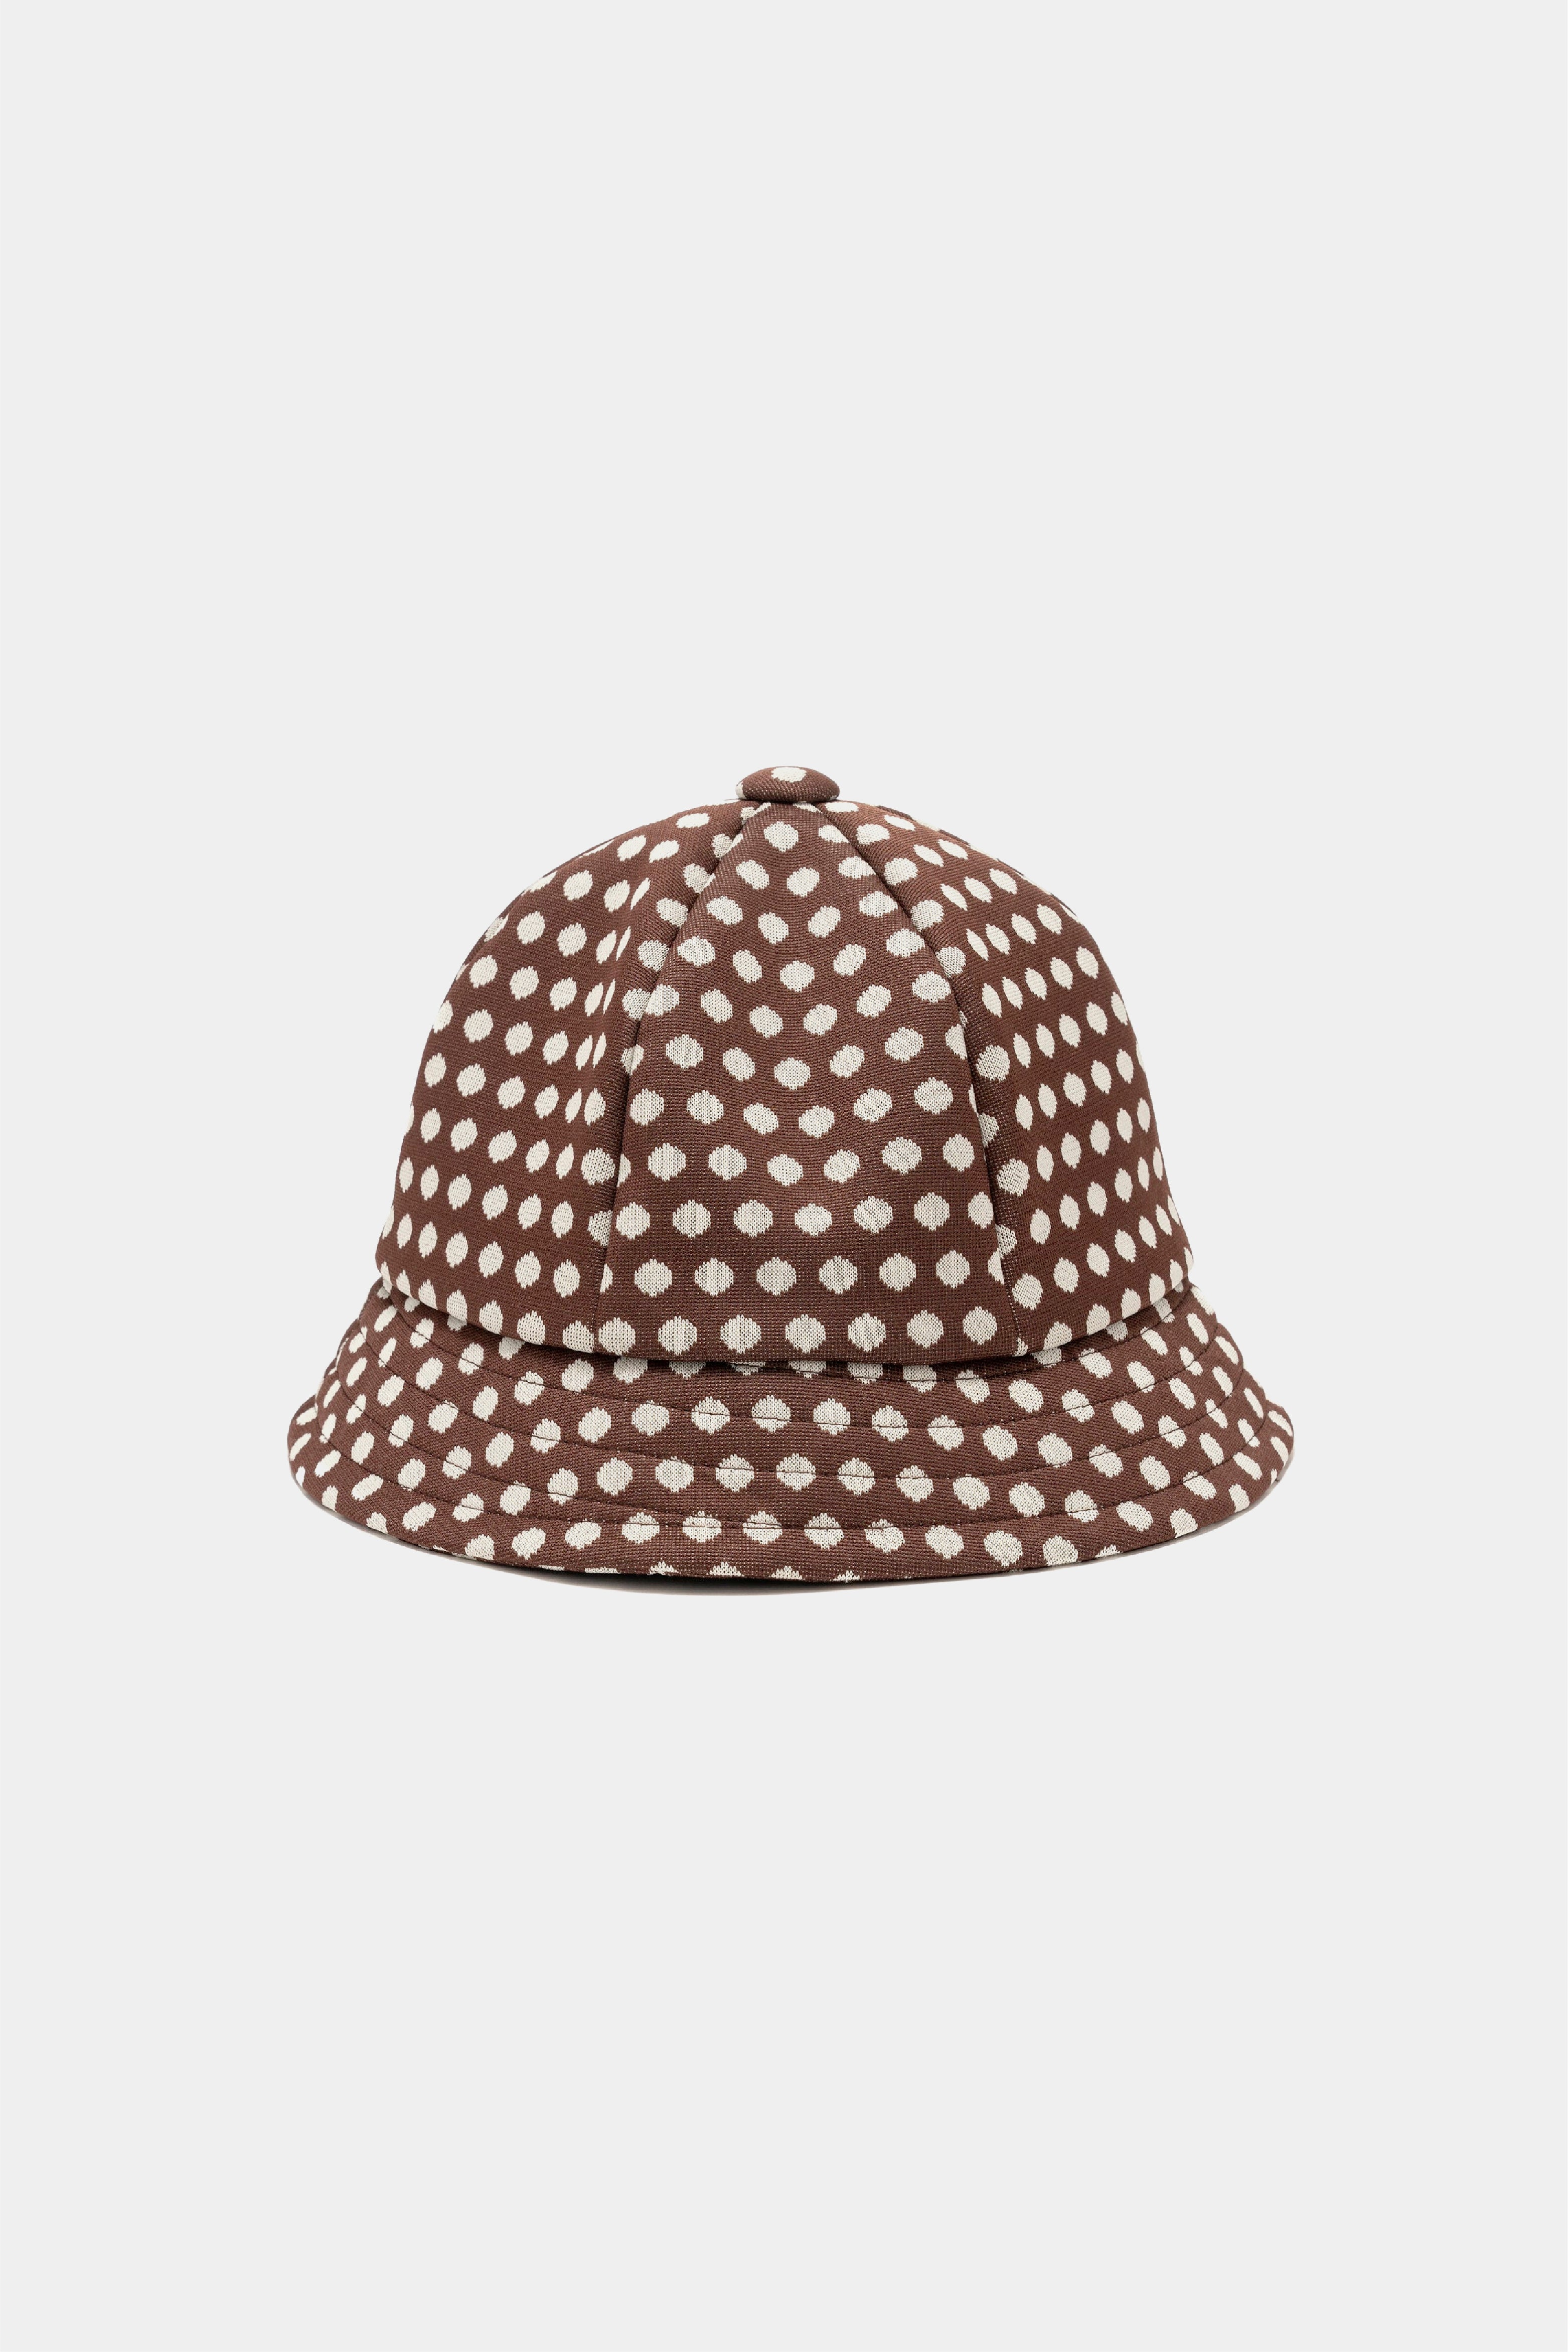 Selectshop FRAME - NEEDLES Bermuda Hat Polka Dot All-accessories Concept Store Dubai